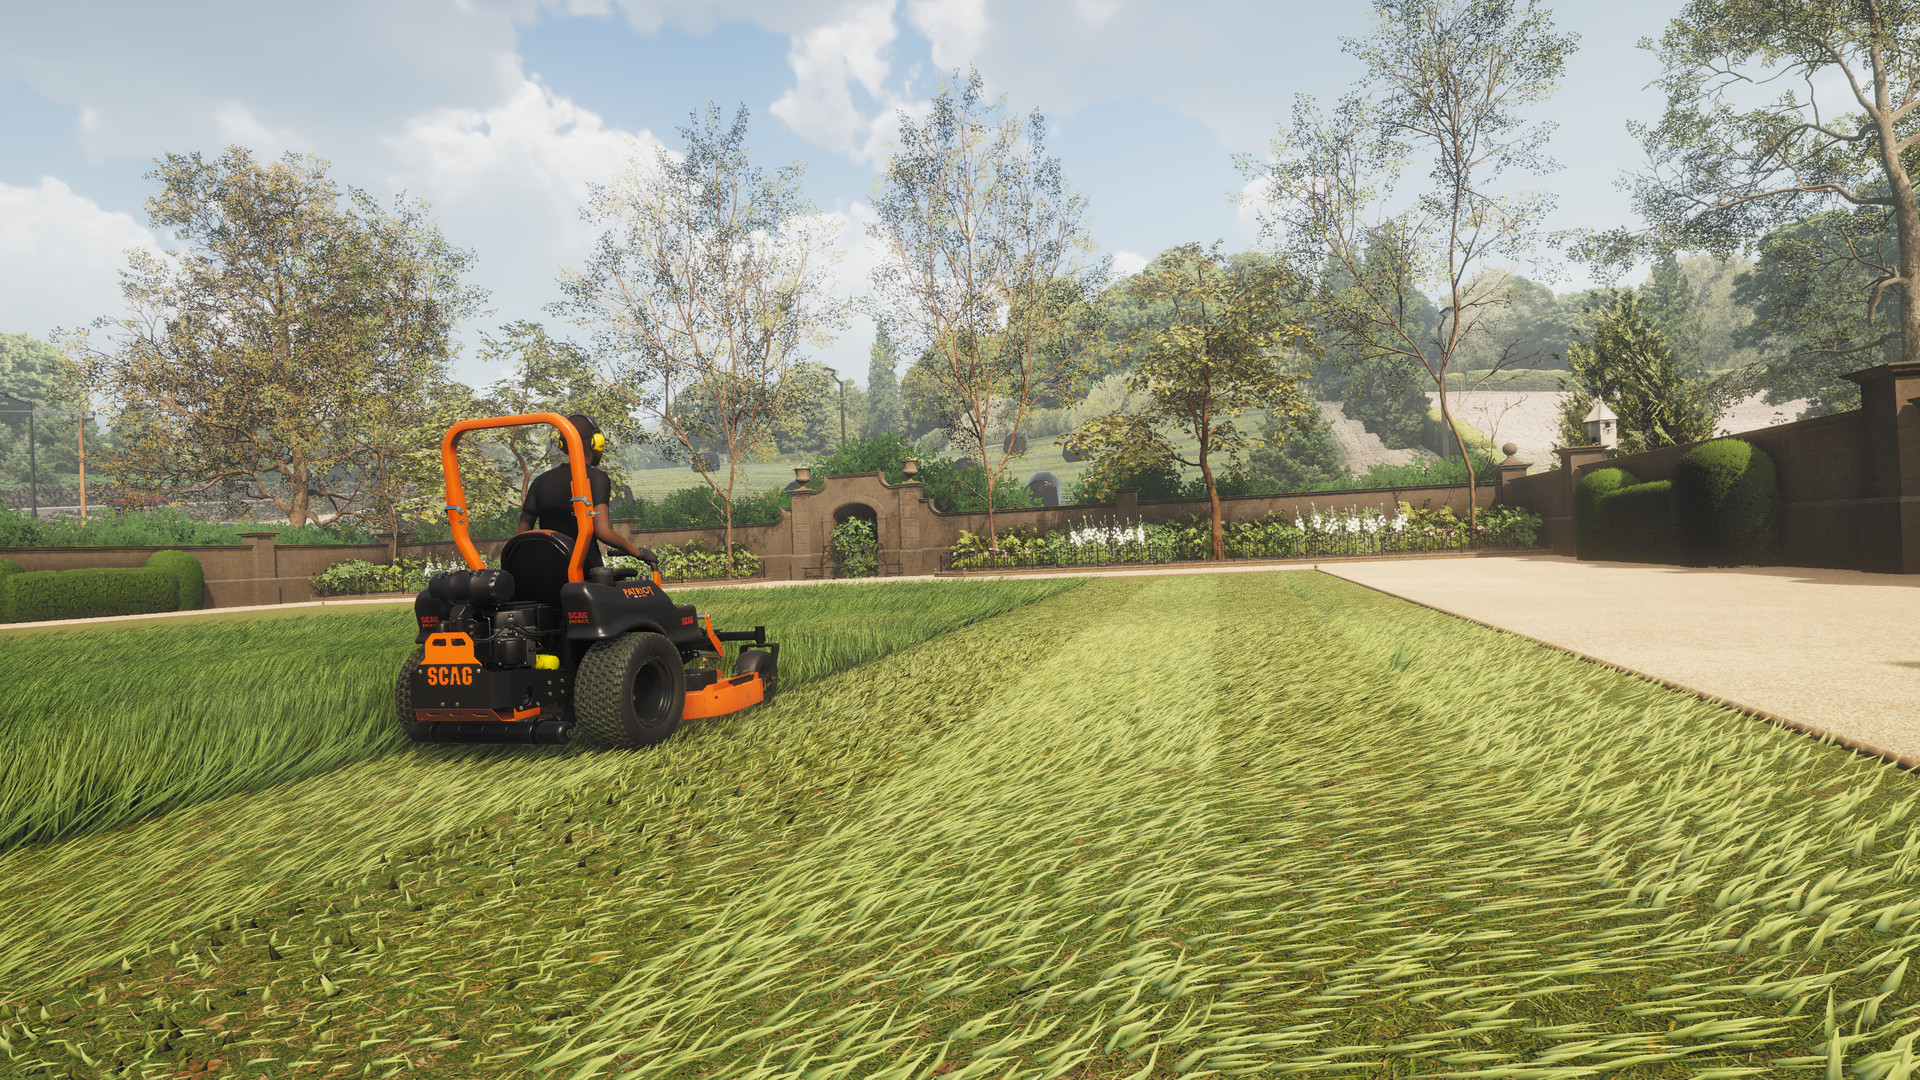 Lawn Mowing Simulator Steam on